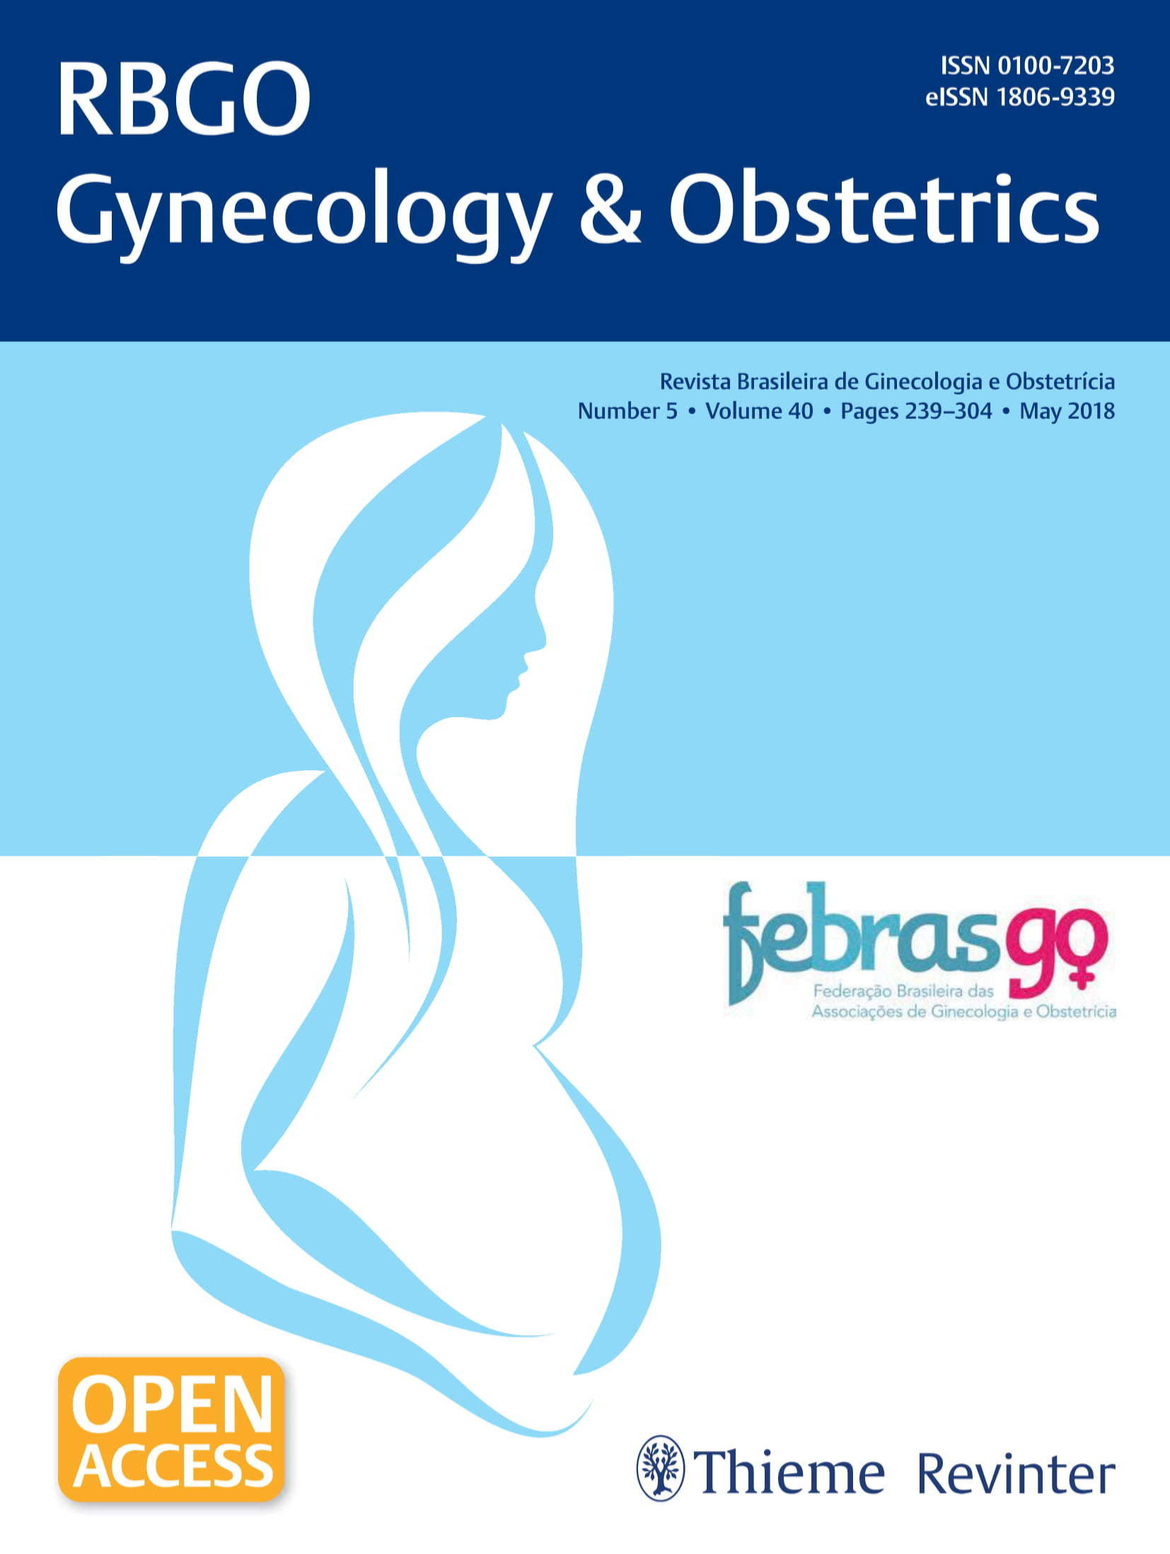 Revista Brasileira de Ginecologia e Obstetrícia – 2018 Vol. 40 n°05